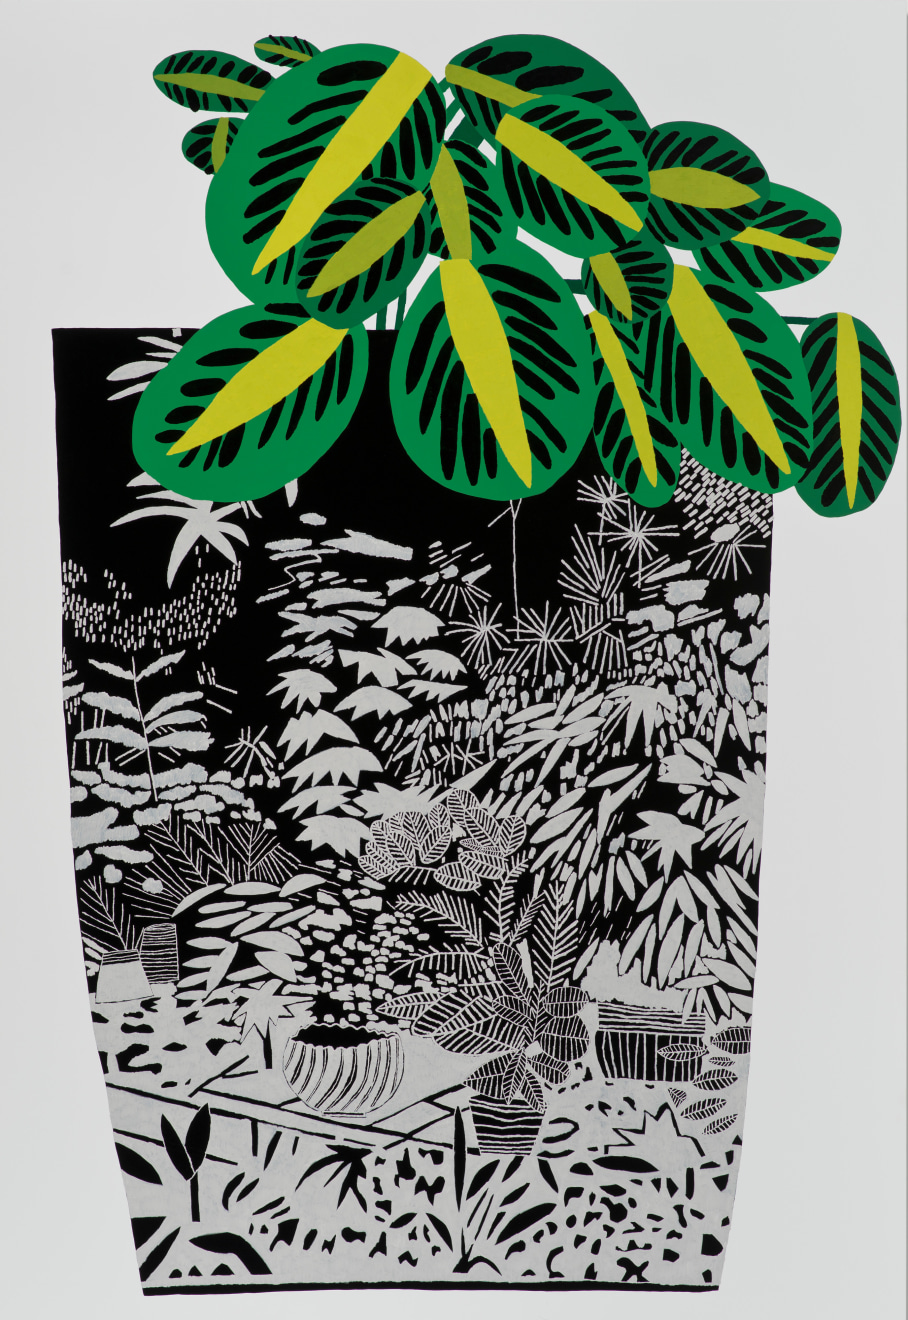 Jonas Wood Black Landscape Pot with Kiwi Plant, 2014